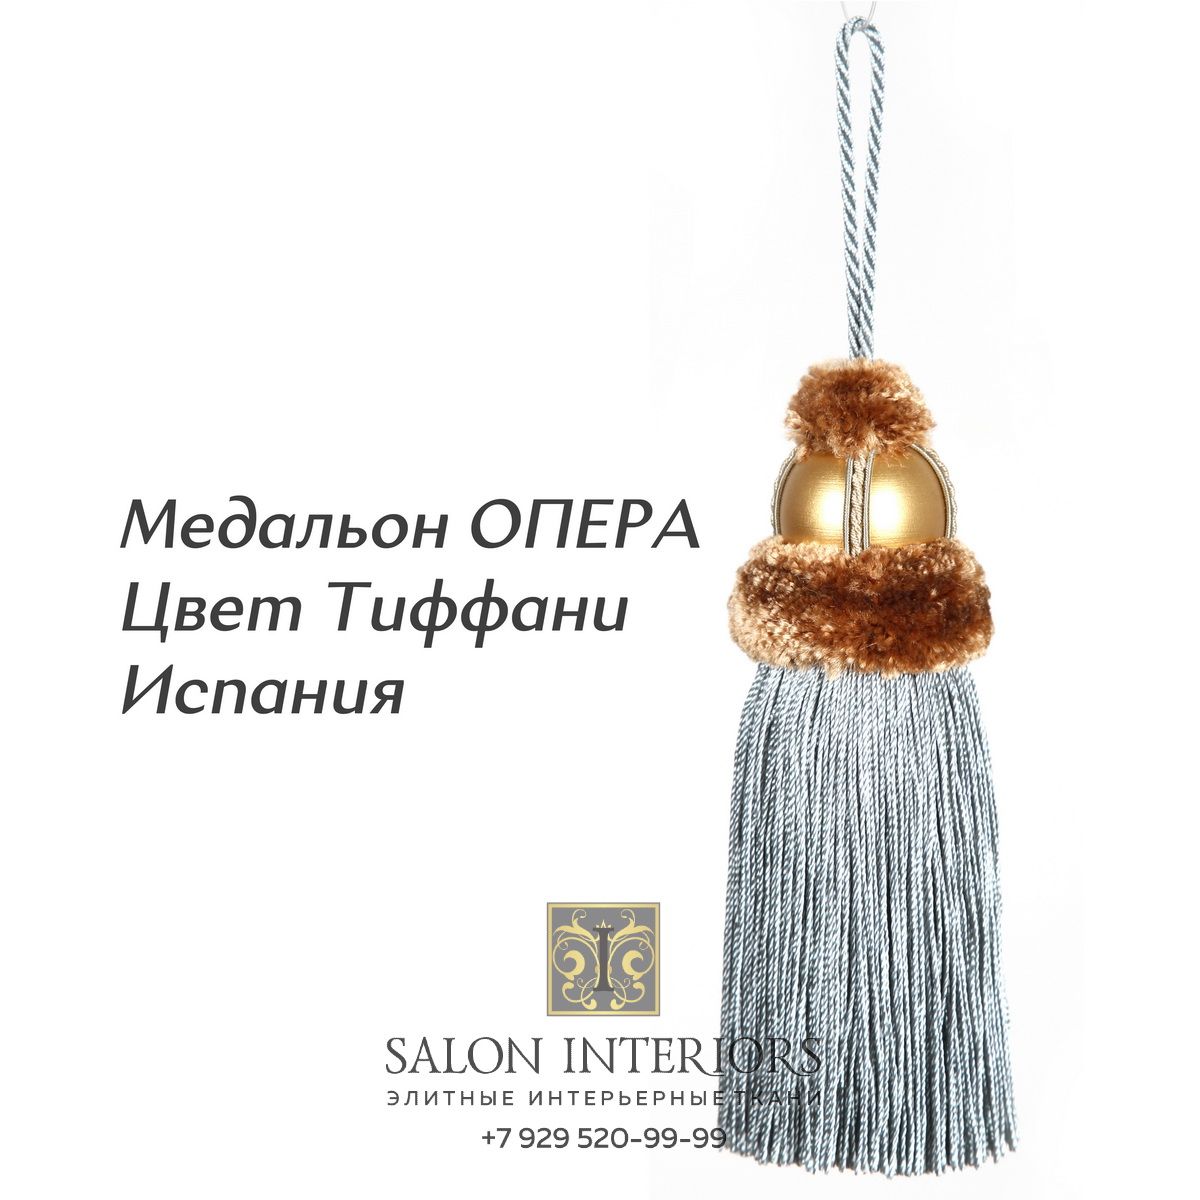 Медальон "ОПЕРА" Арт MK991-1963 Цвет Тиффани разм.18см Испания